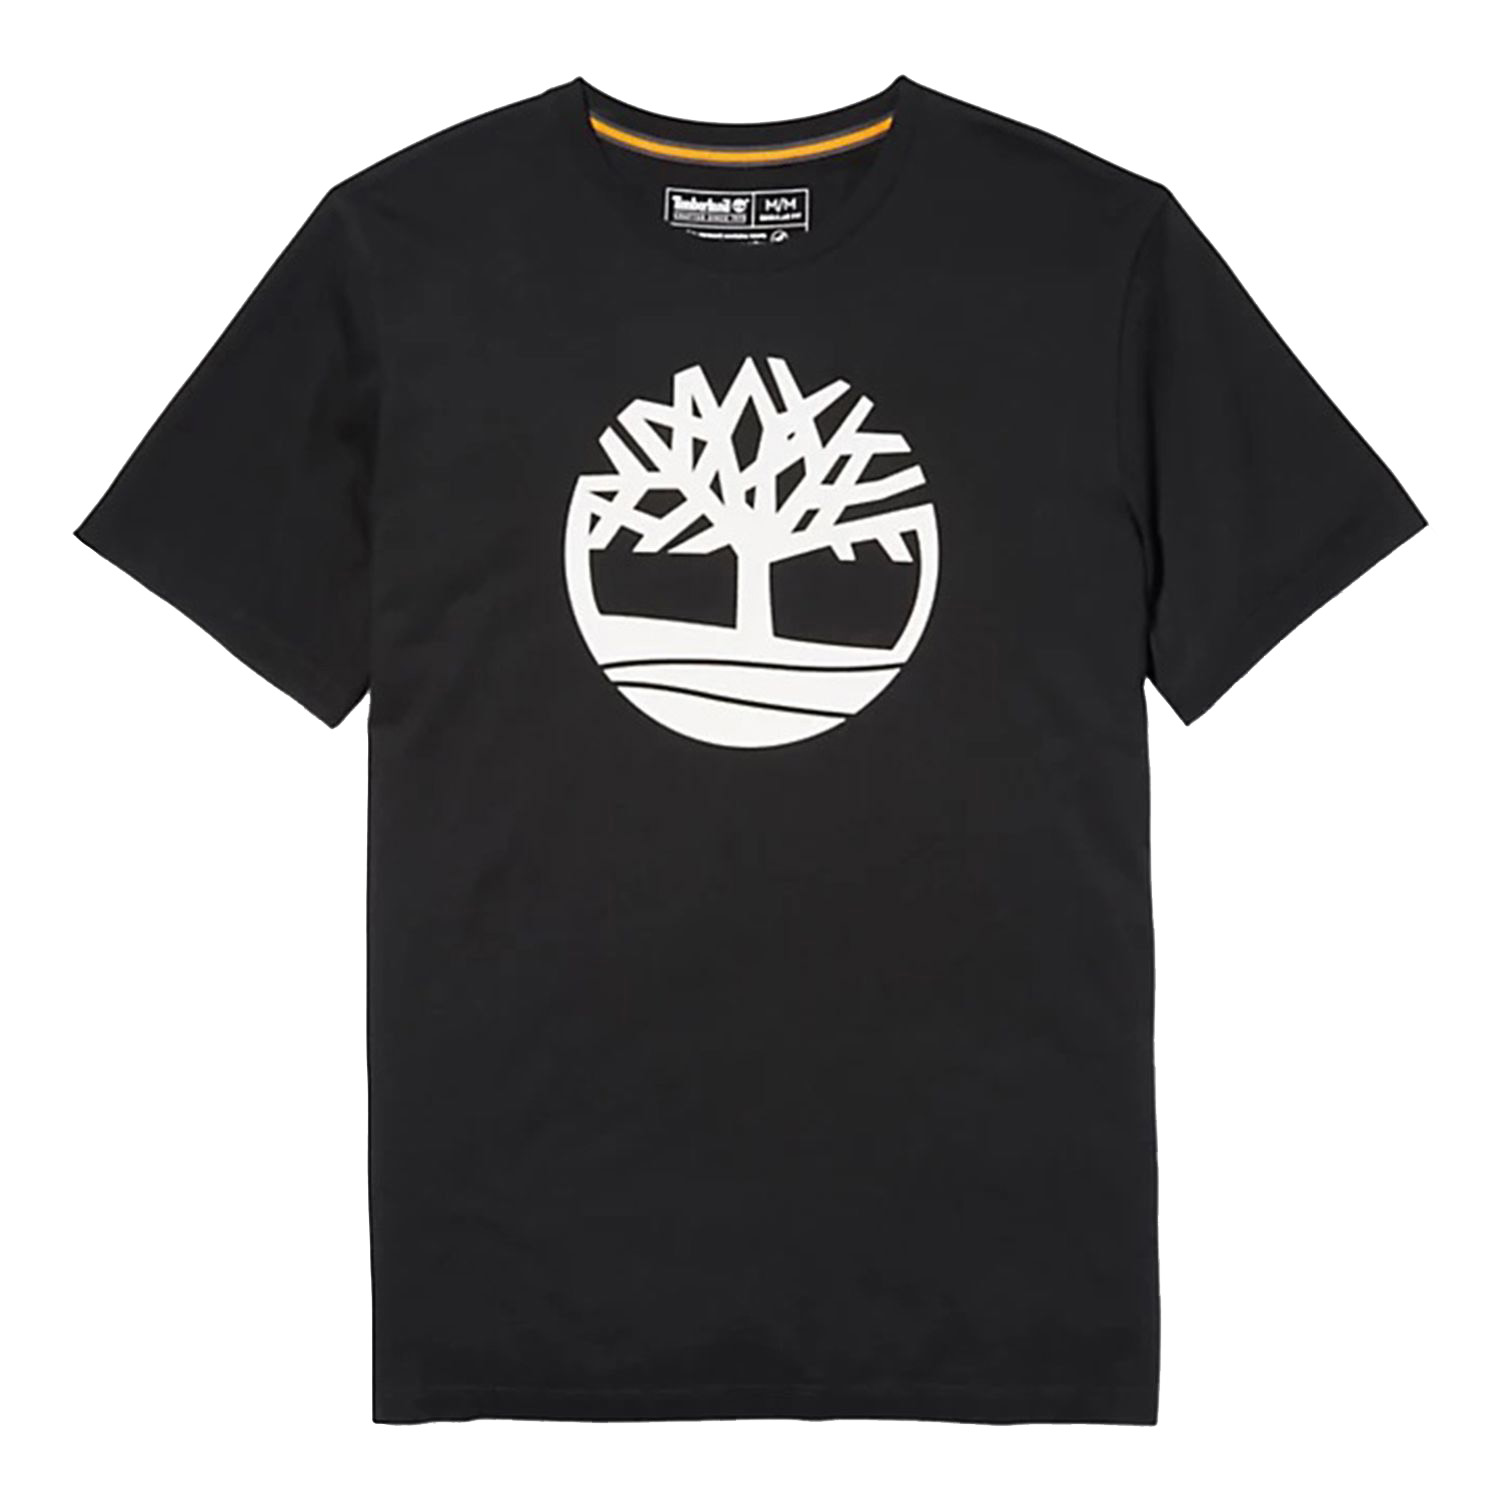 Timberland SS TREE LOGO T Herren T-Shirt Shirt TB0A2C6S schwarz von Timberland